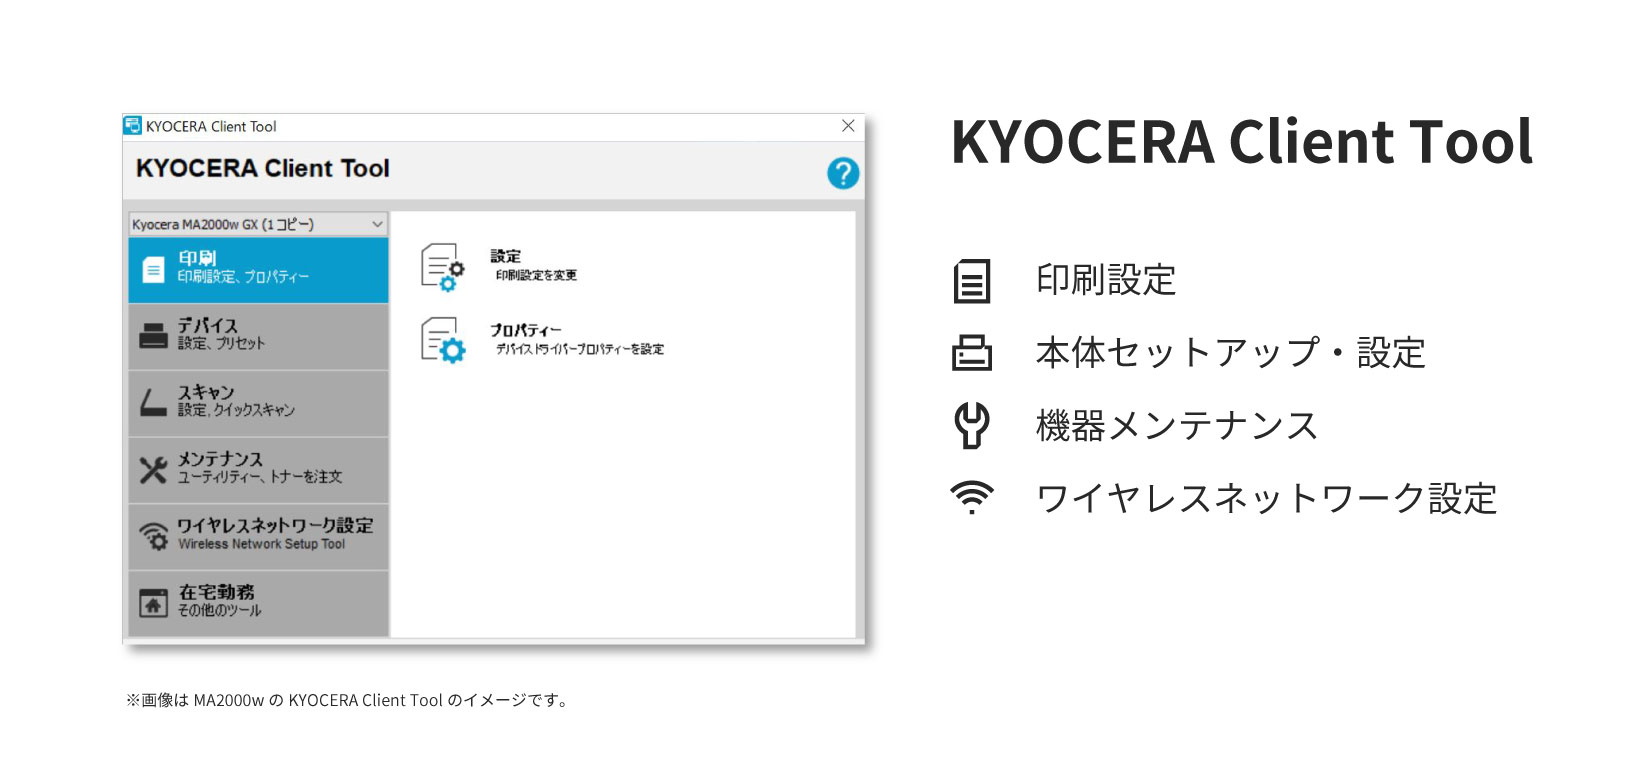 KYOCERA Client Toolで多彩な機能を活用